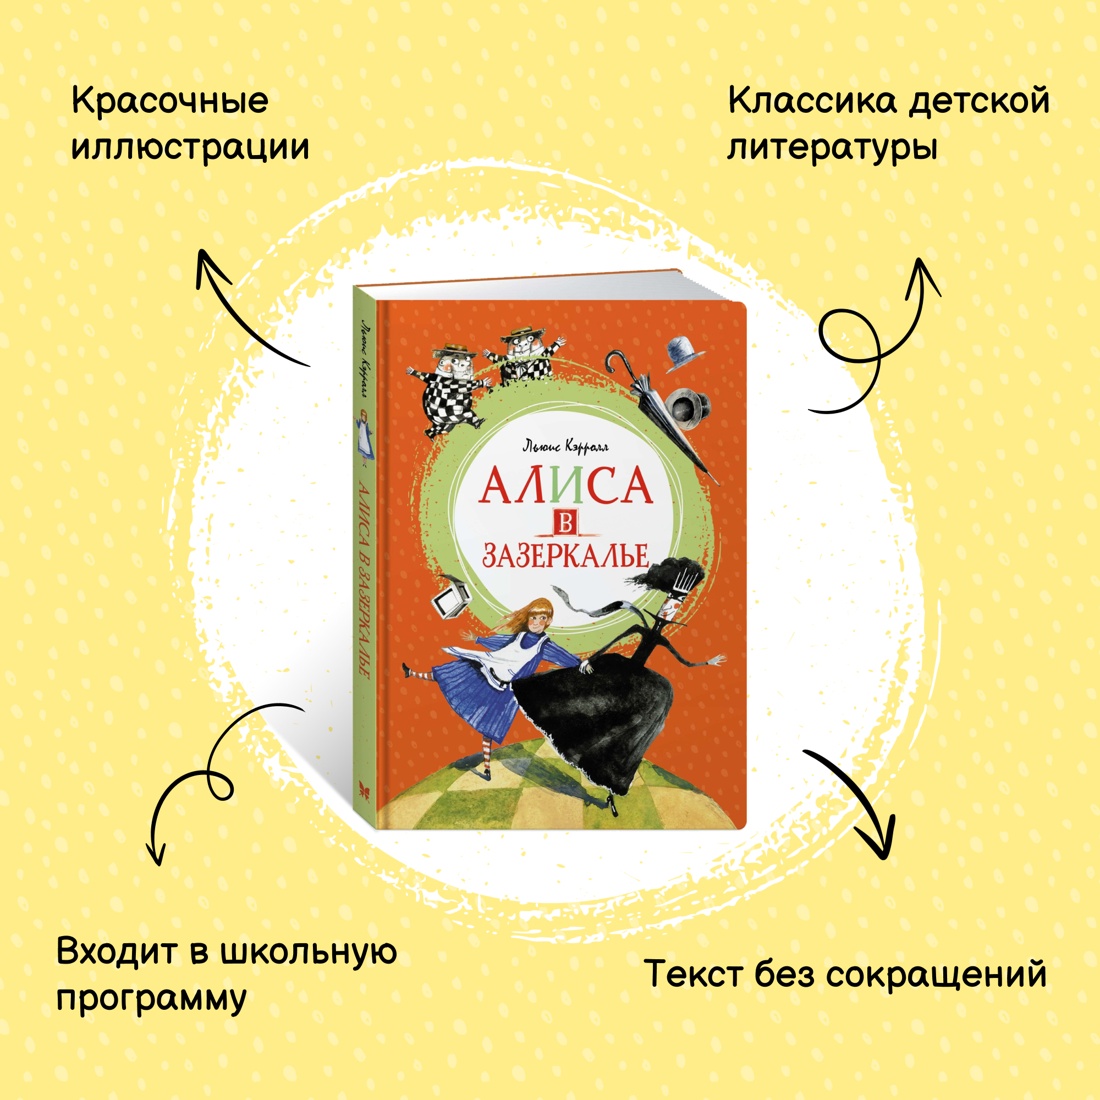 Промо материал к книге "Алиса в Зазеркалье" №0